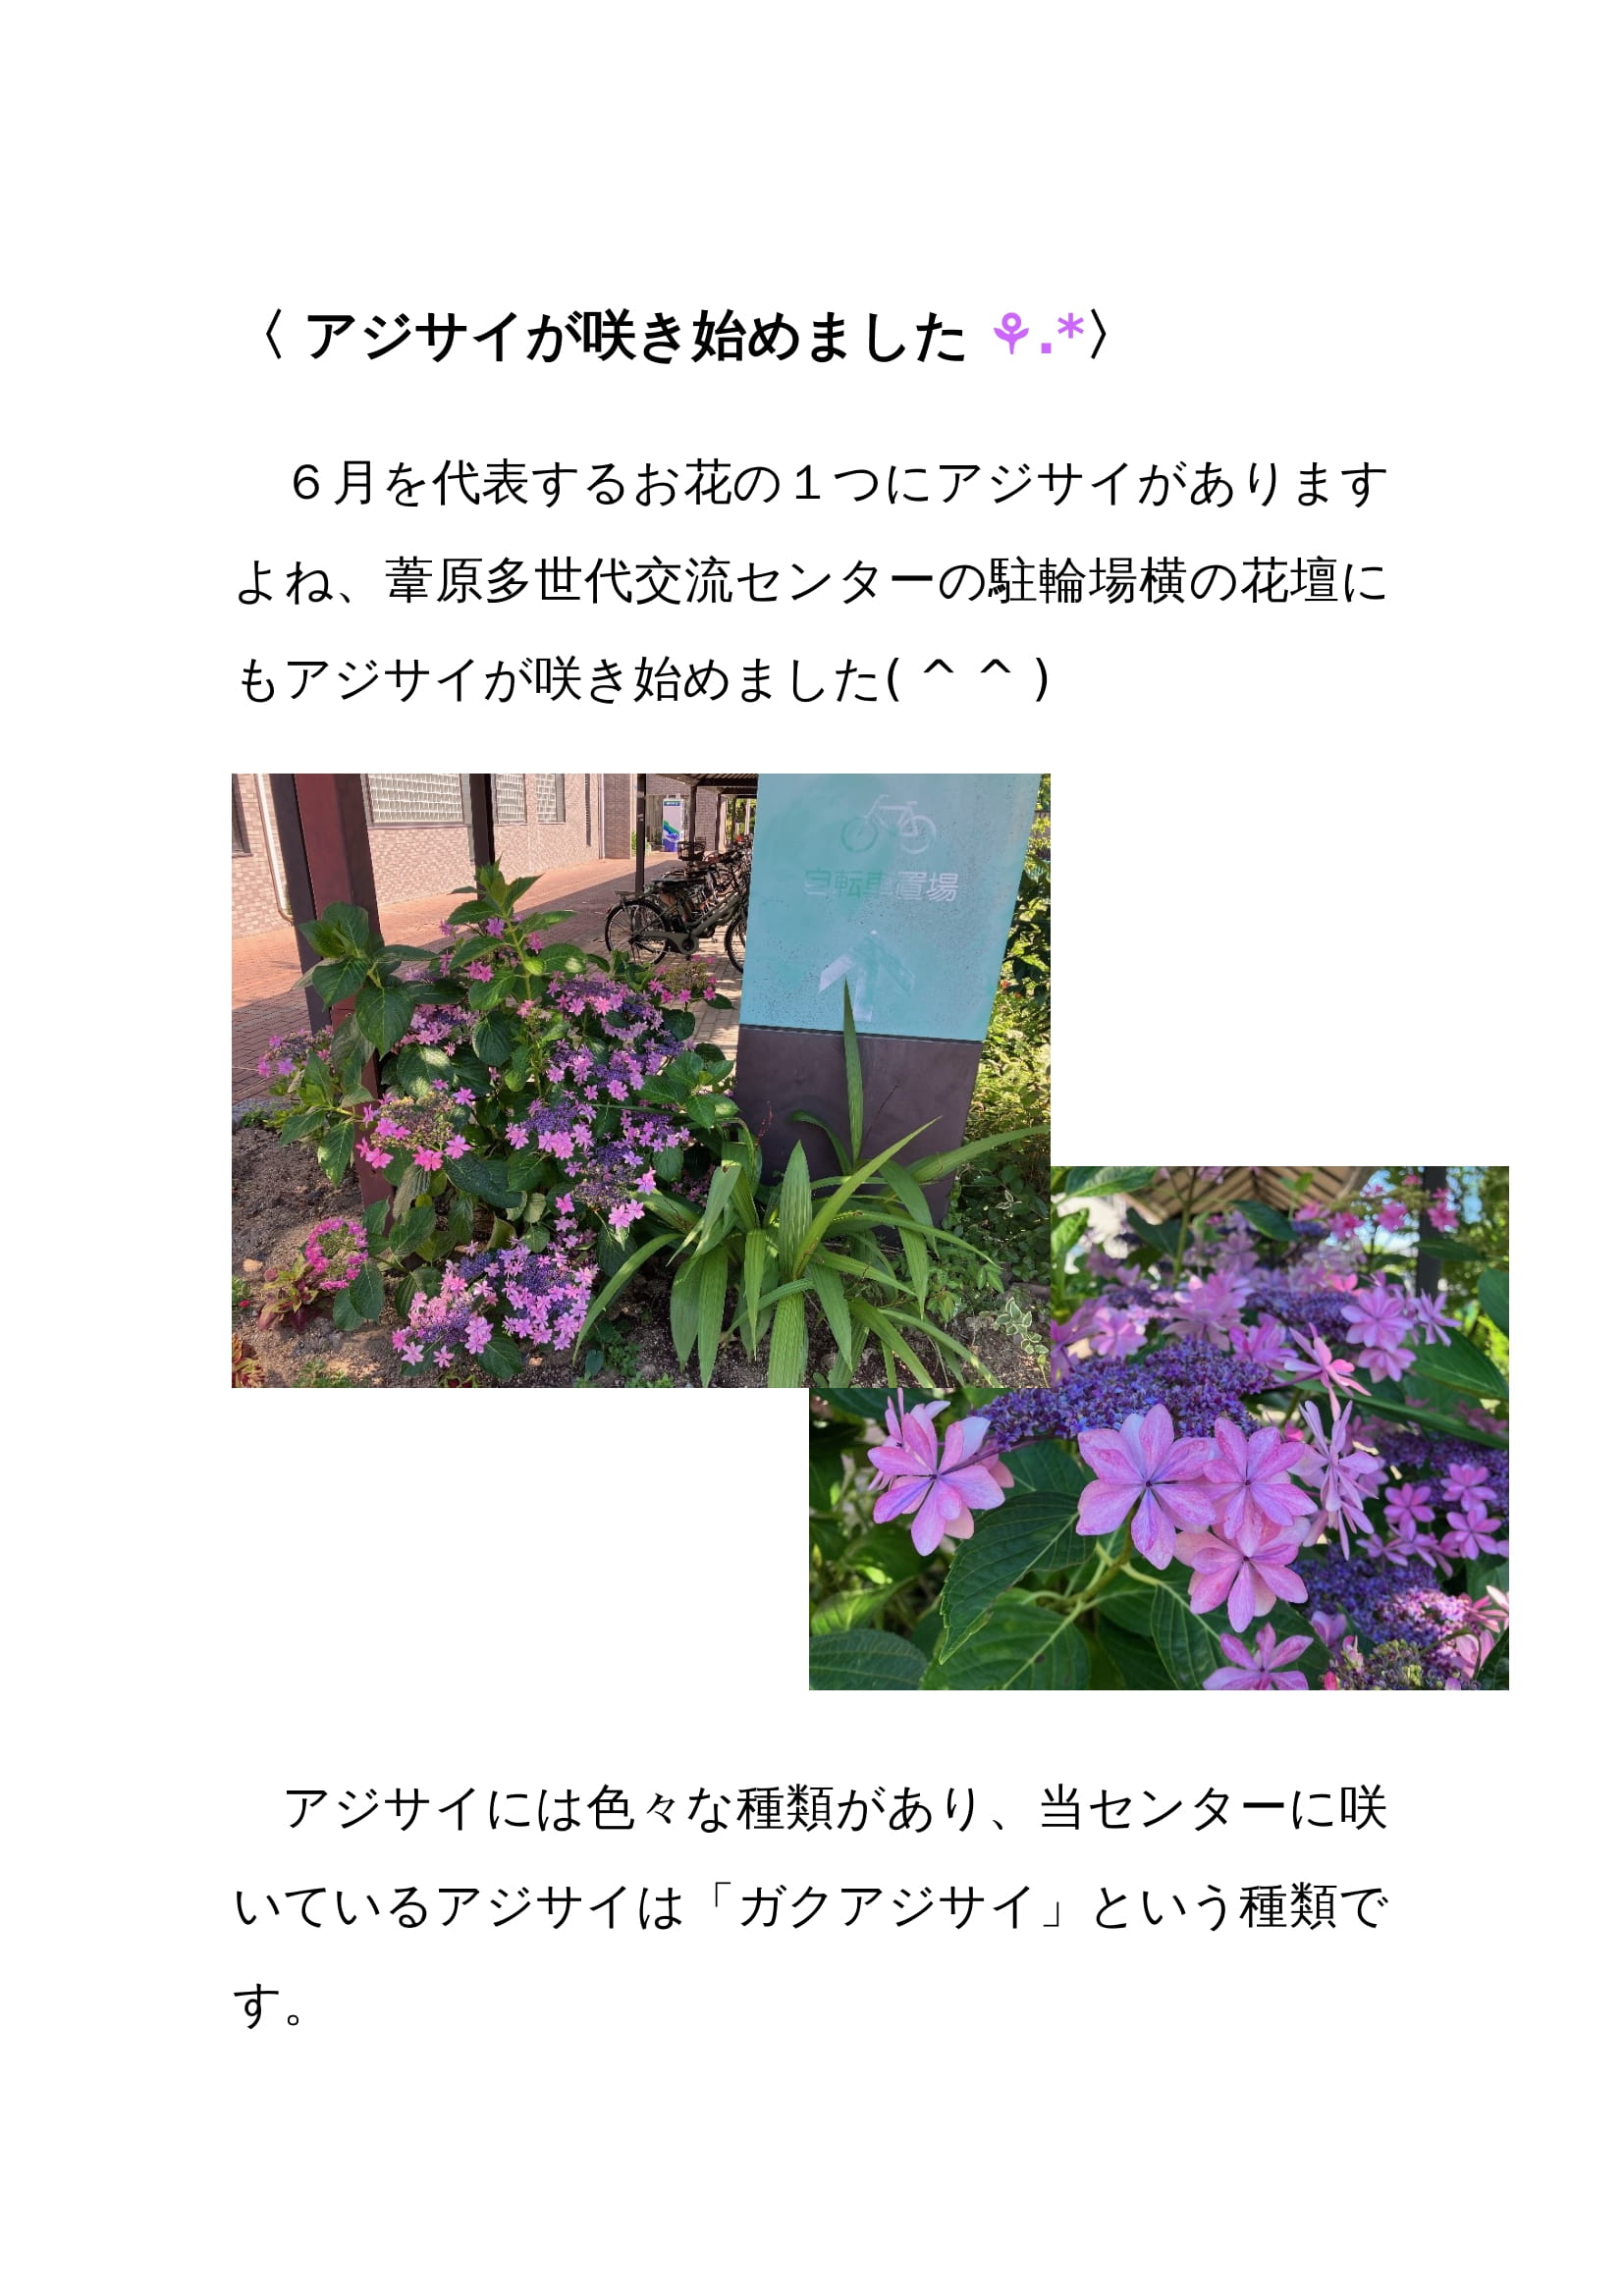 茨木市葦原多世代交流センター　紫陽花